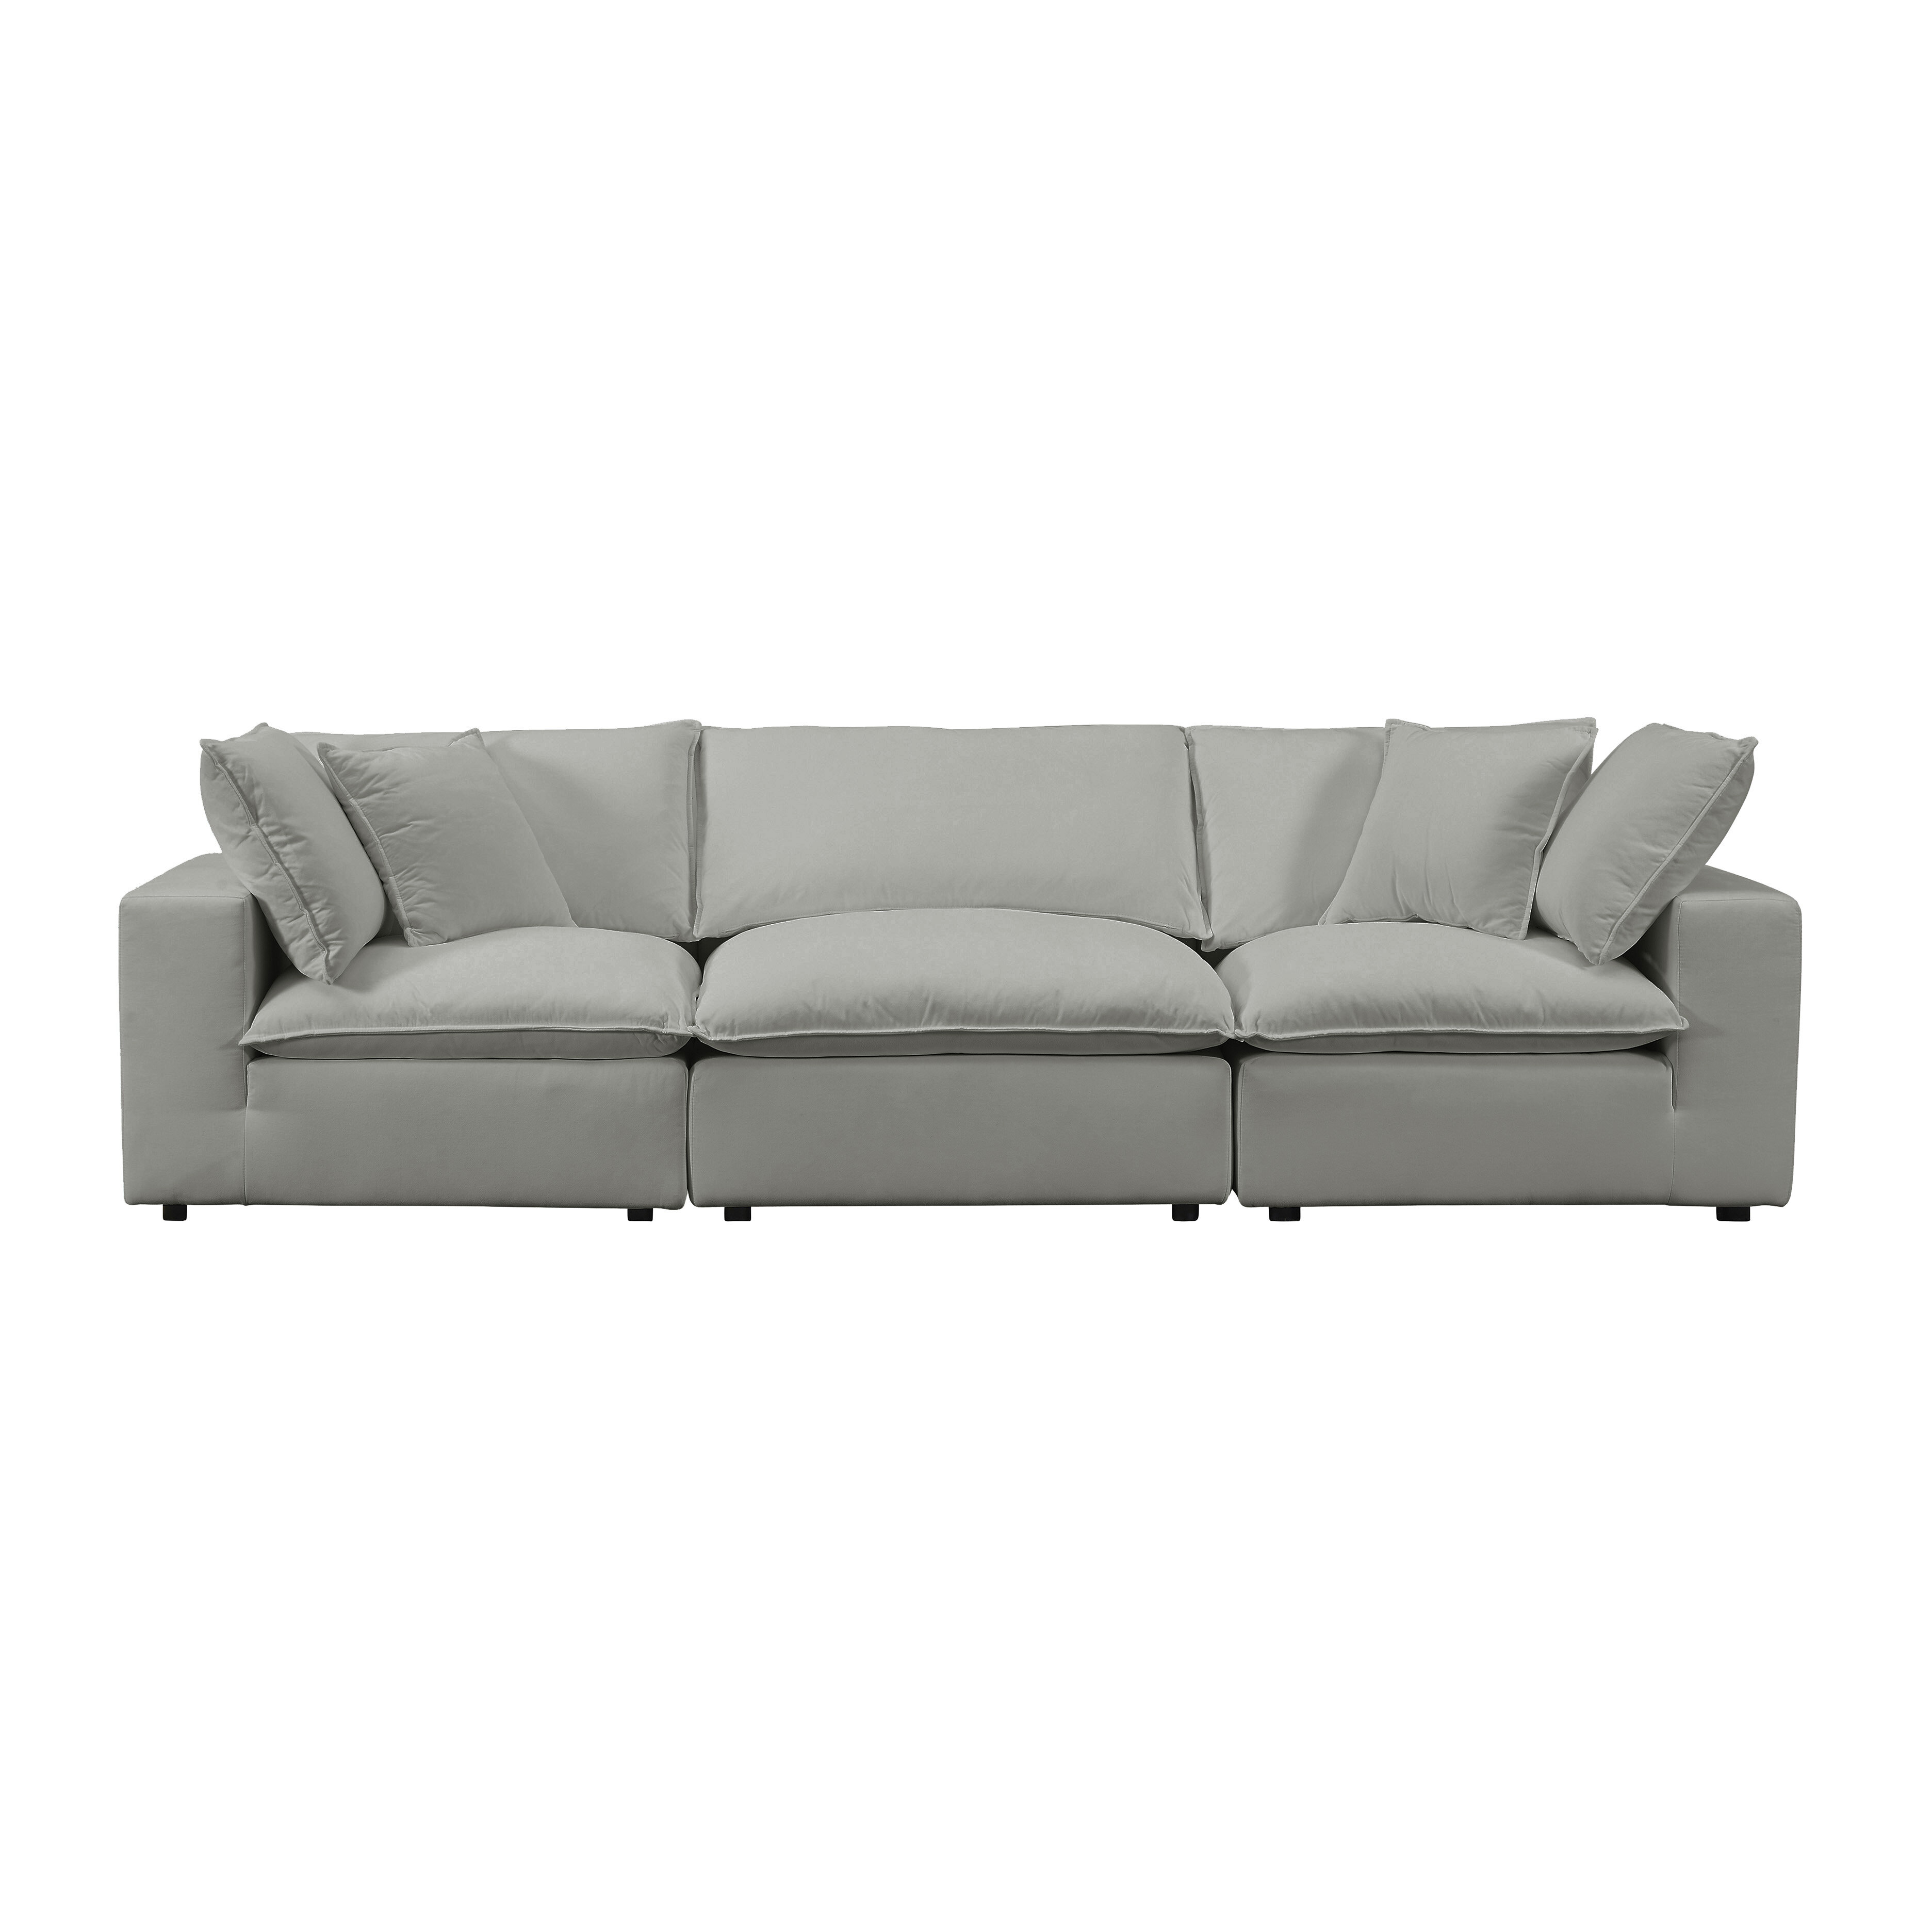 Kensington Navy Back Cushion for Sofa and sectional modular pieces